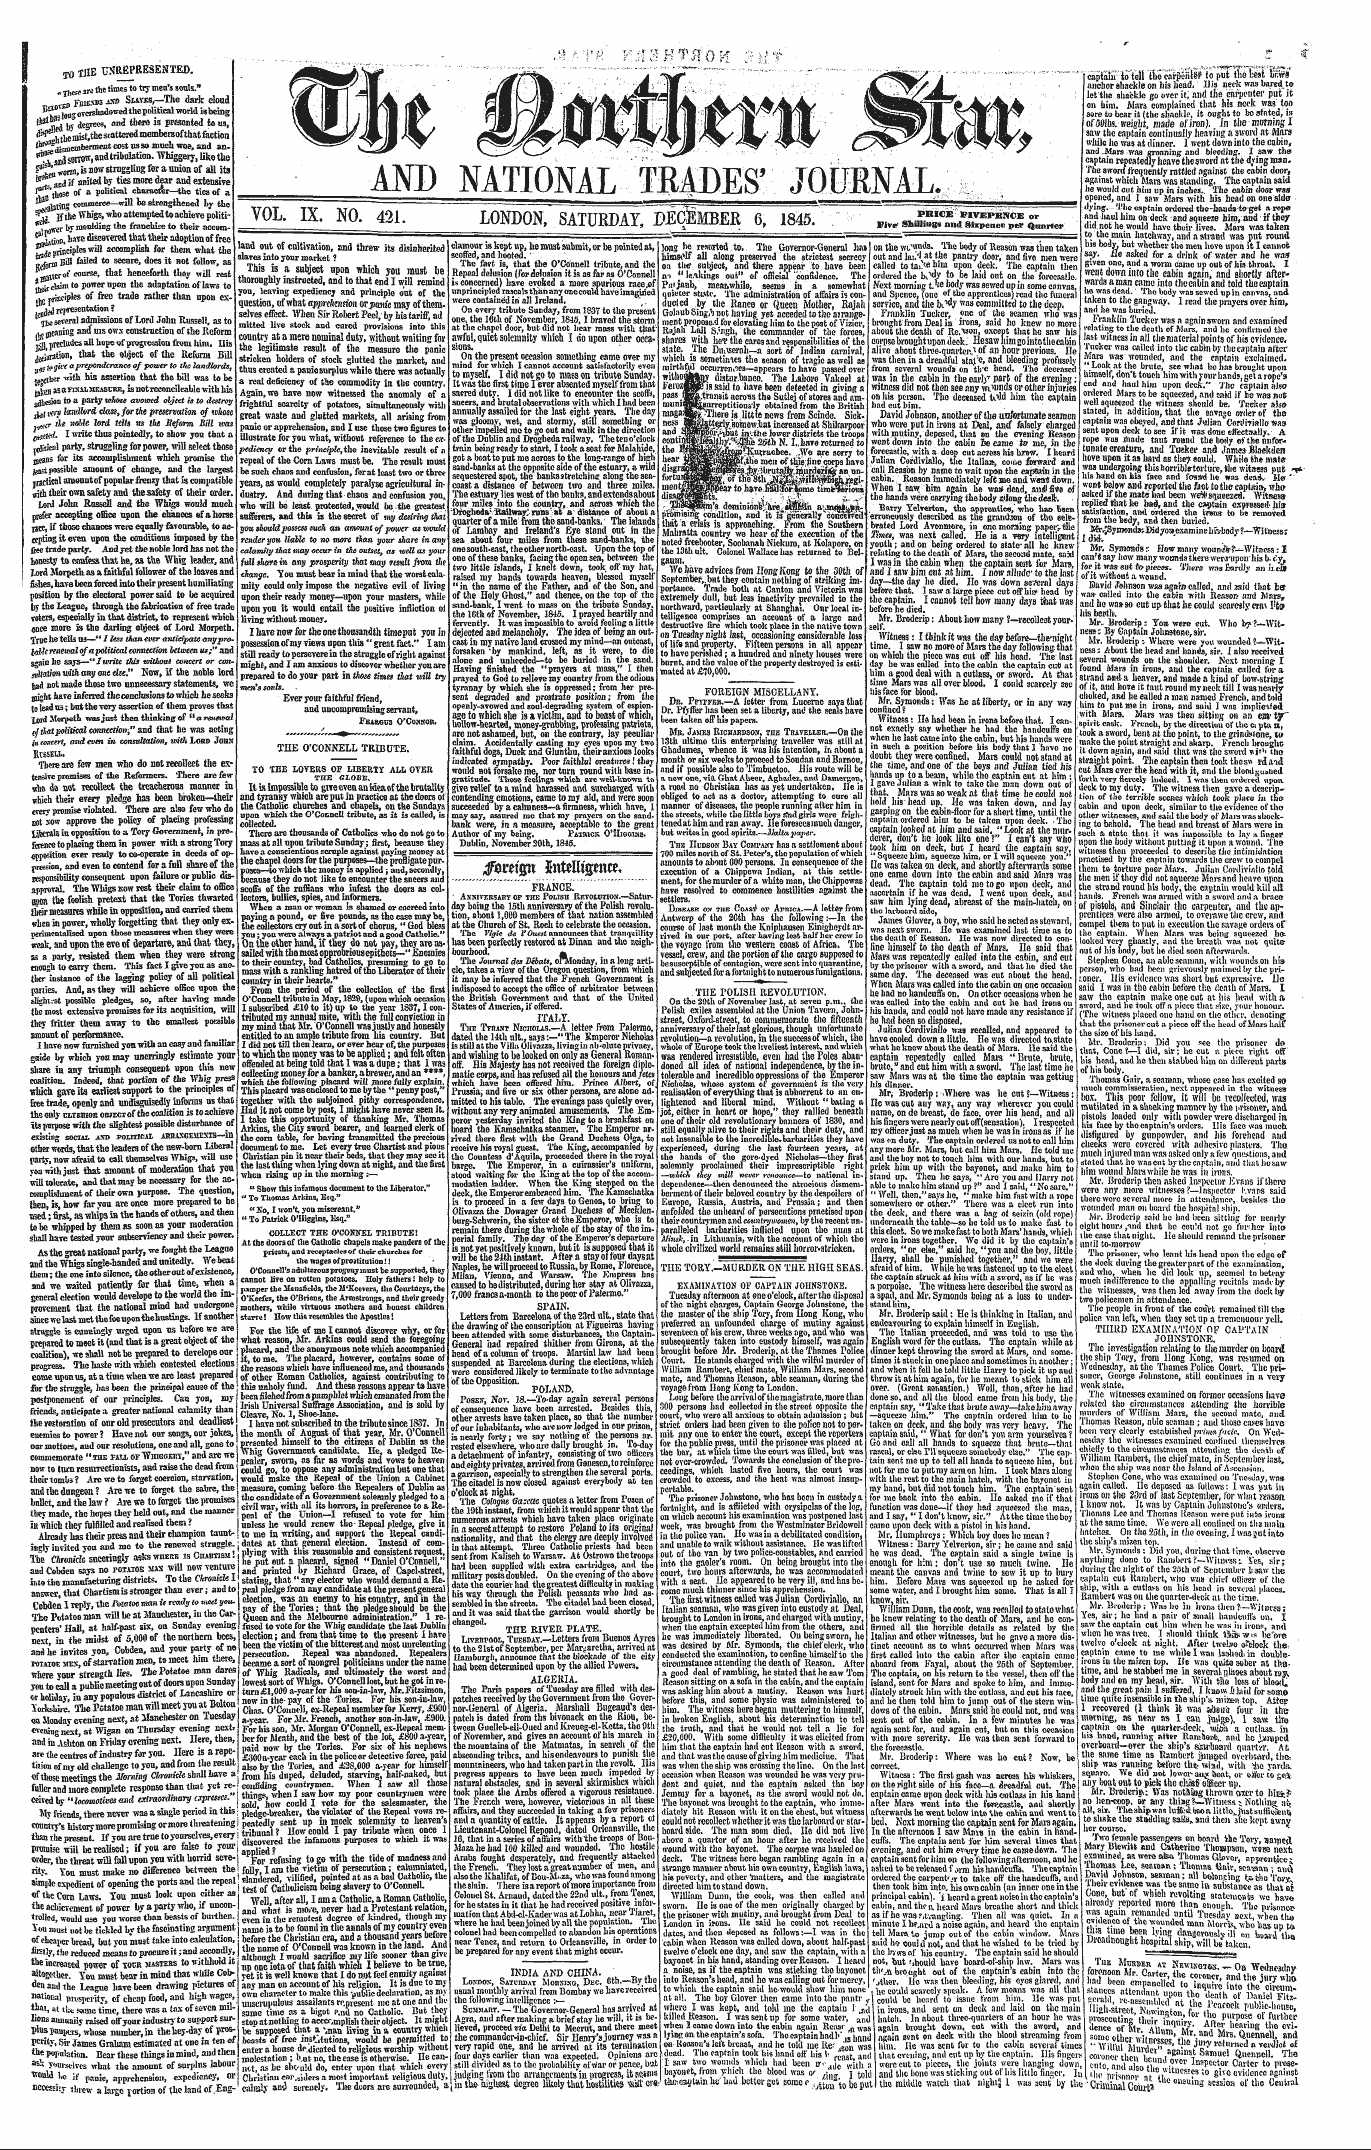 Northern Star (1837-1852): jS F Y, 3rd edition: 1